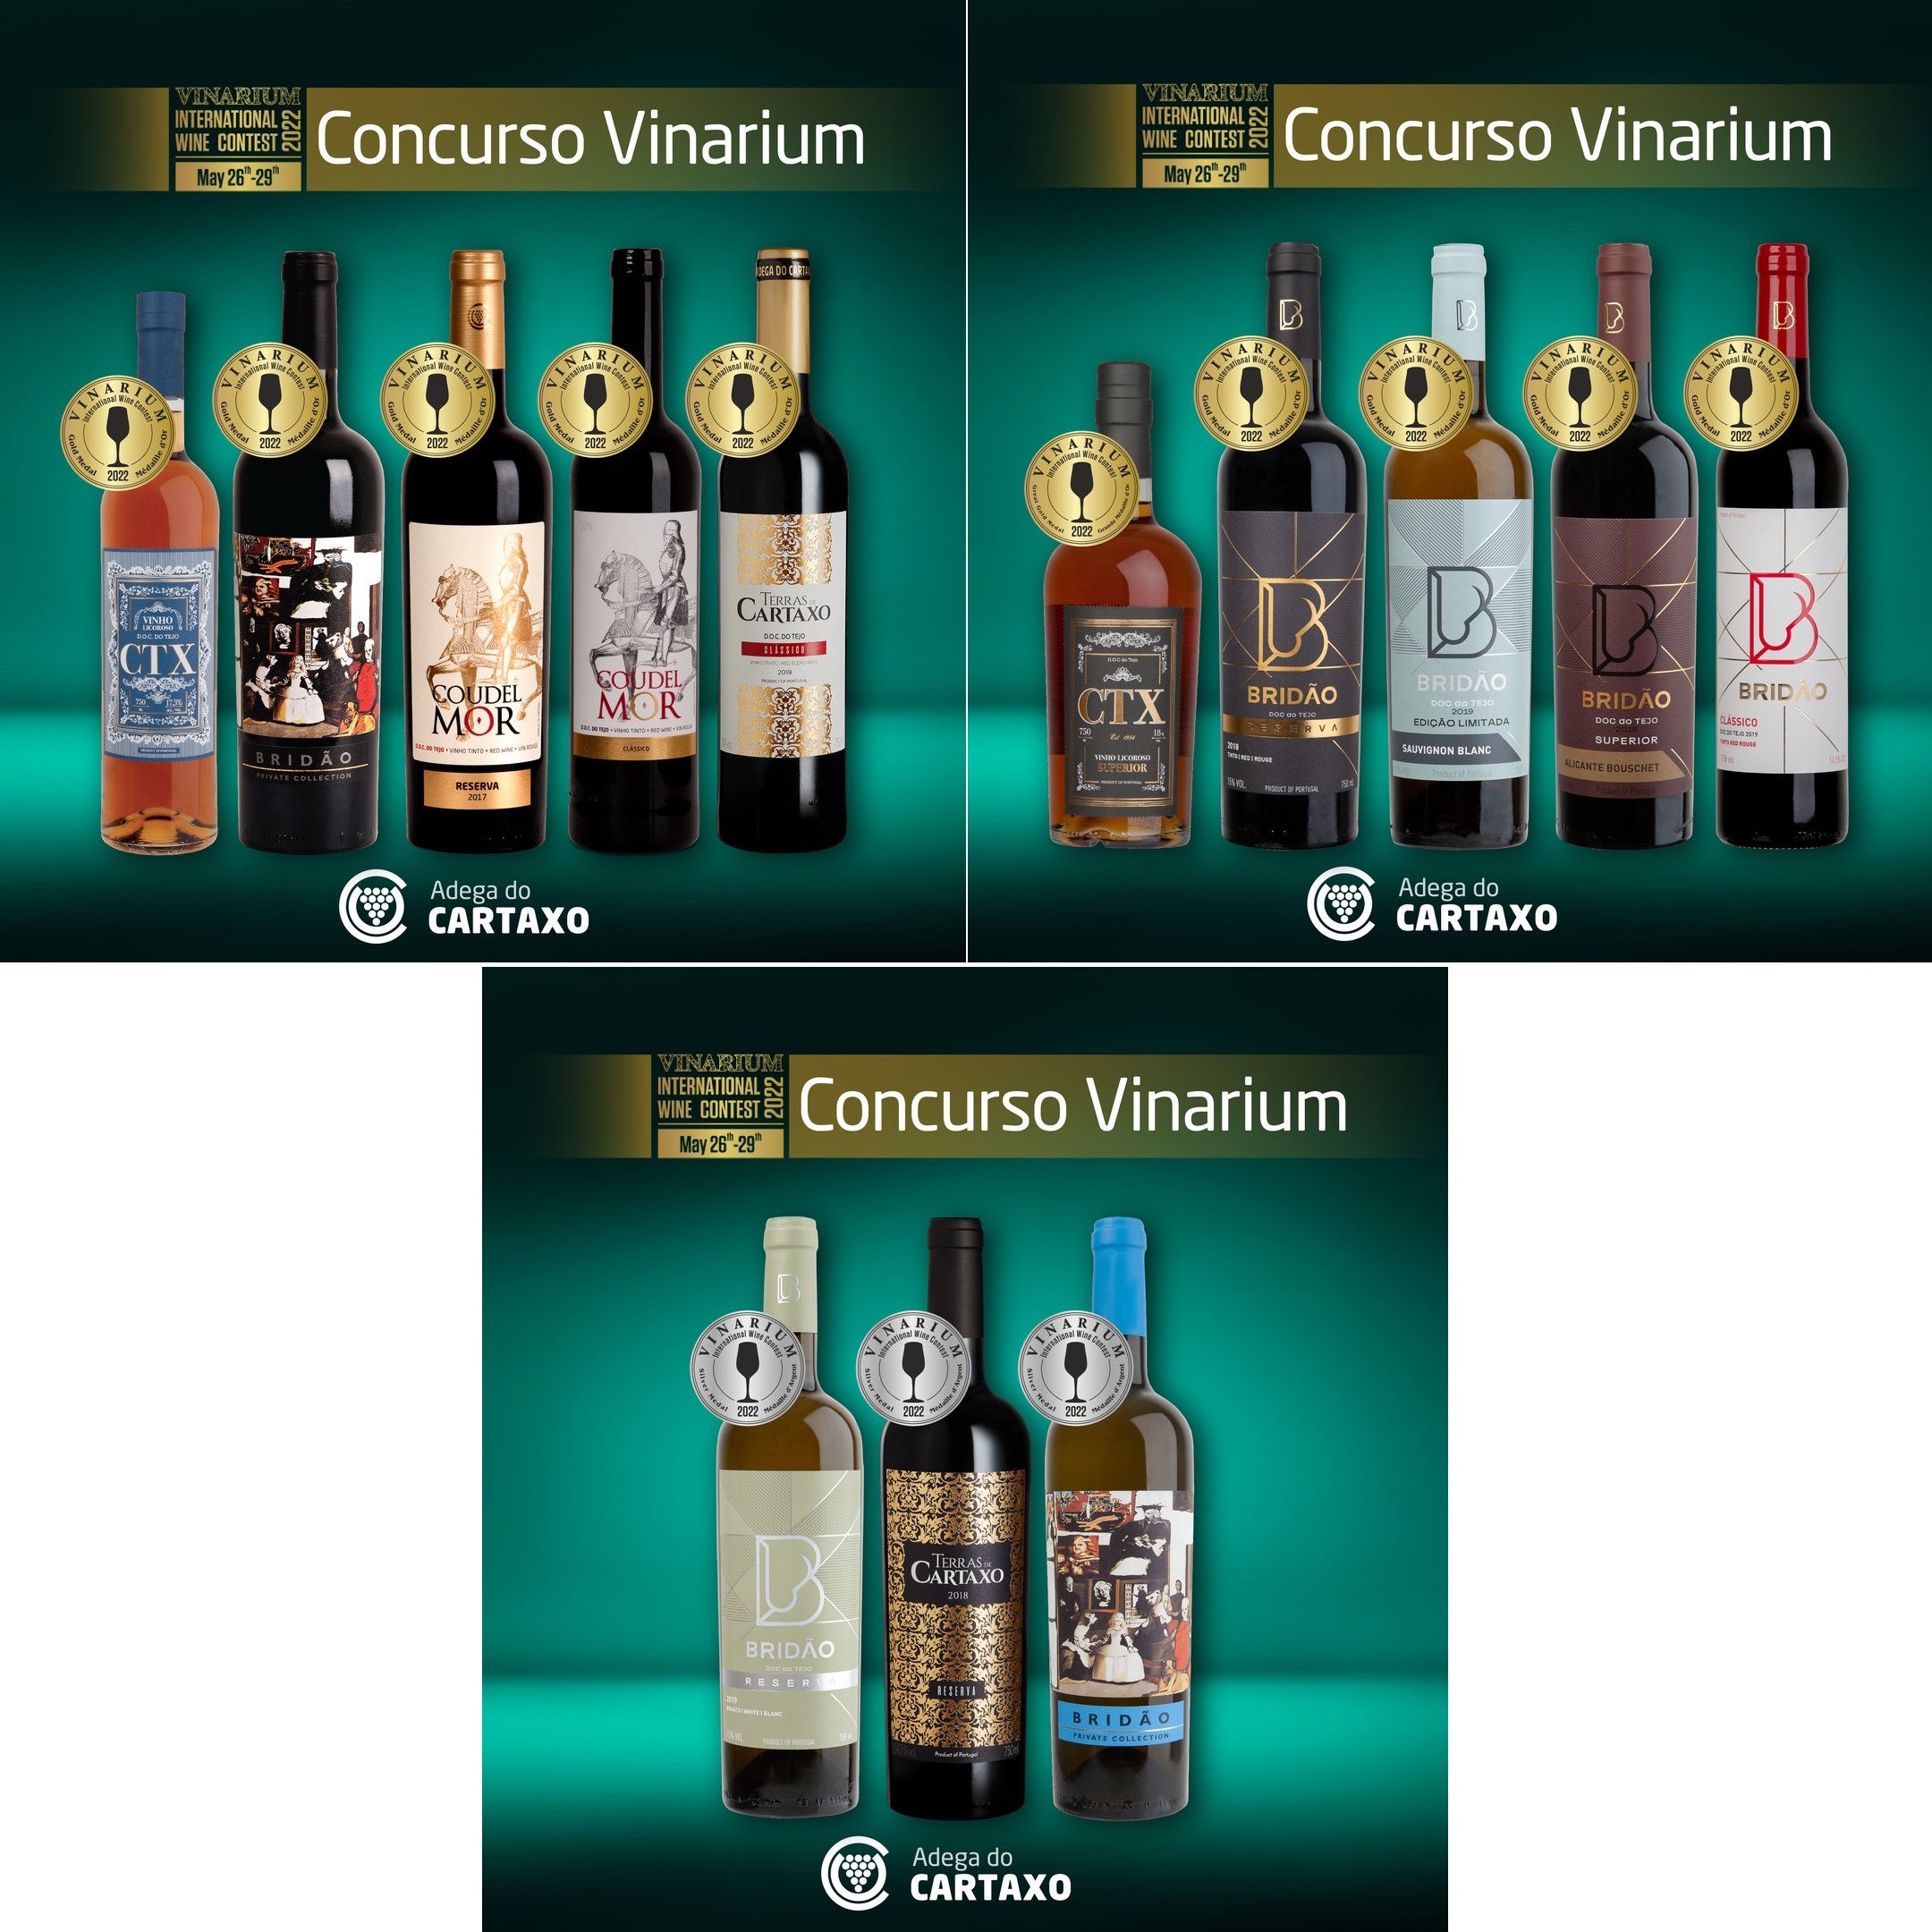 13 distinctions in the VINARIUM International Wine Contest